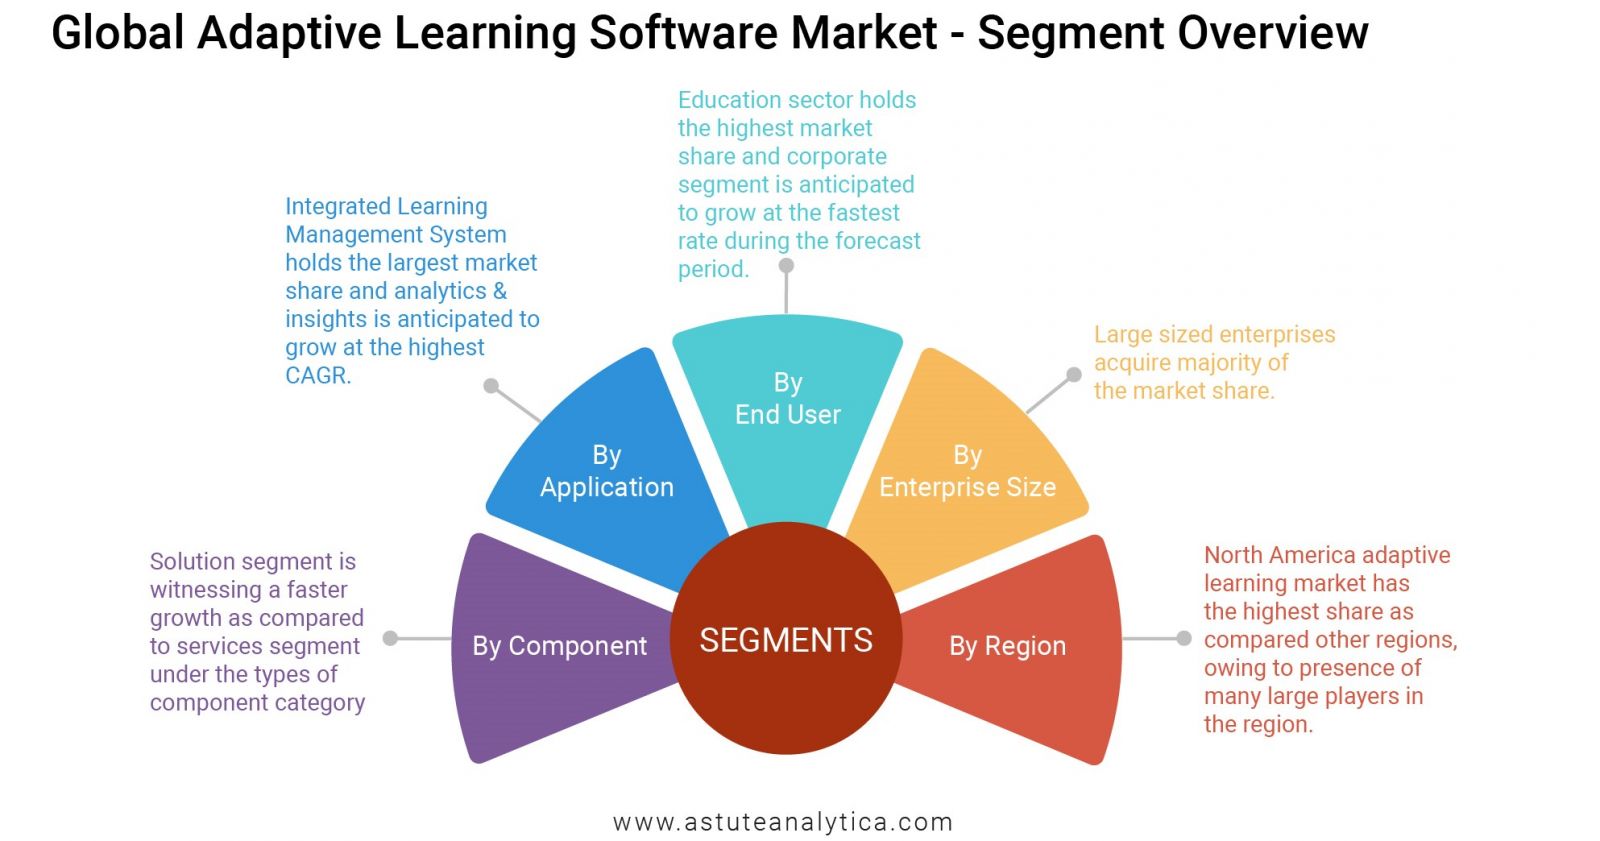 Adaptive Learning Software Market - Segmentation